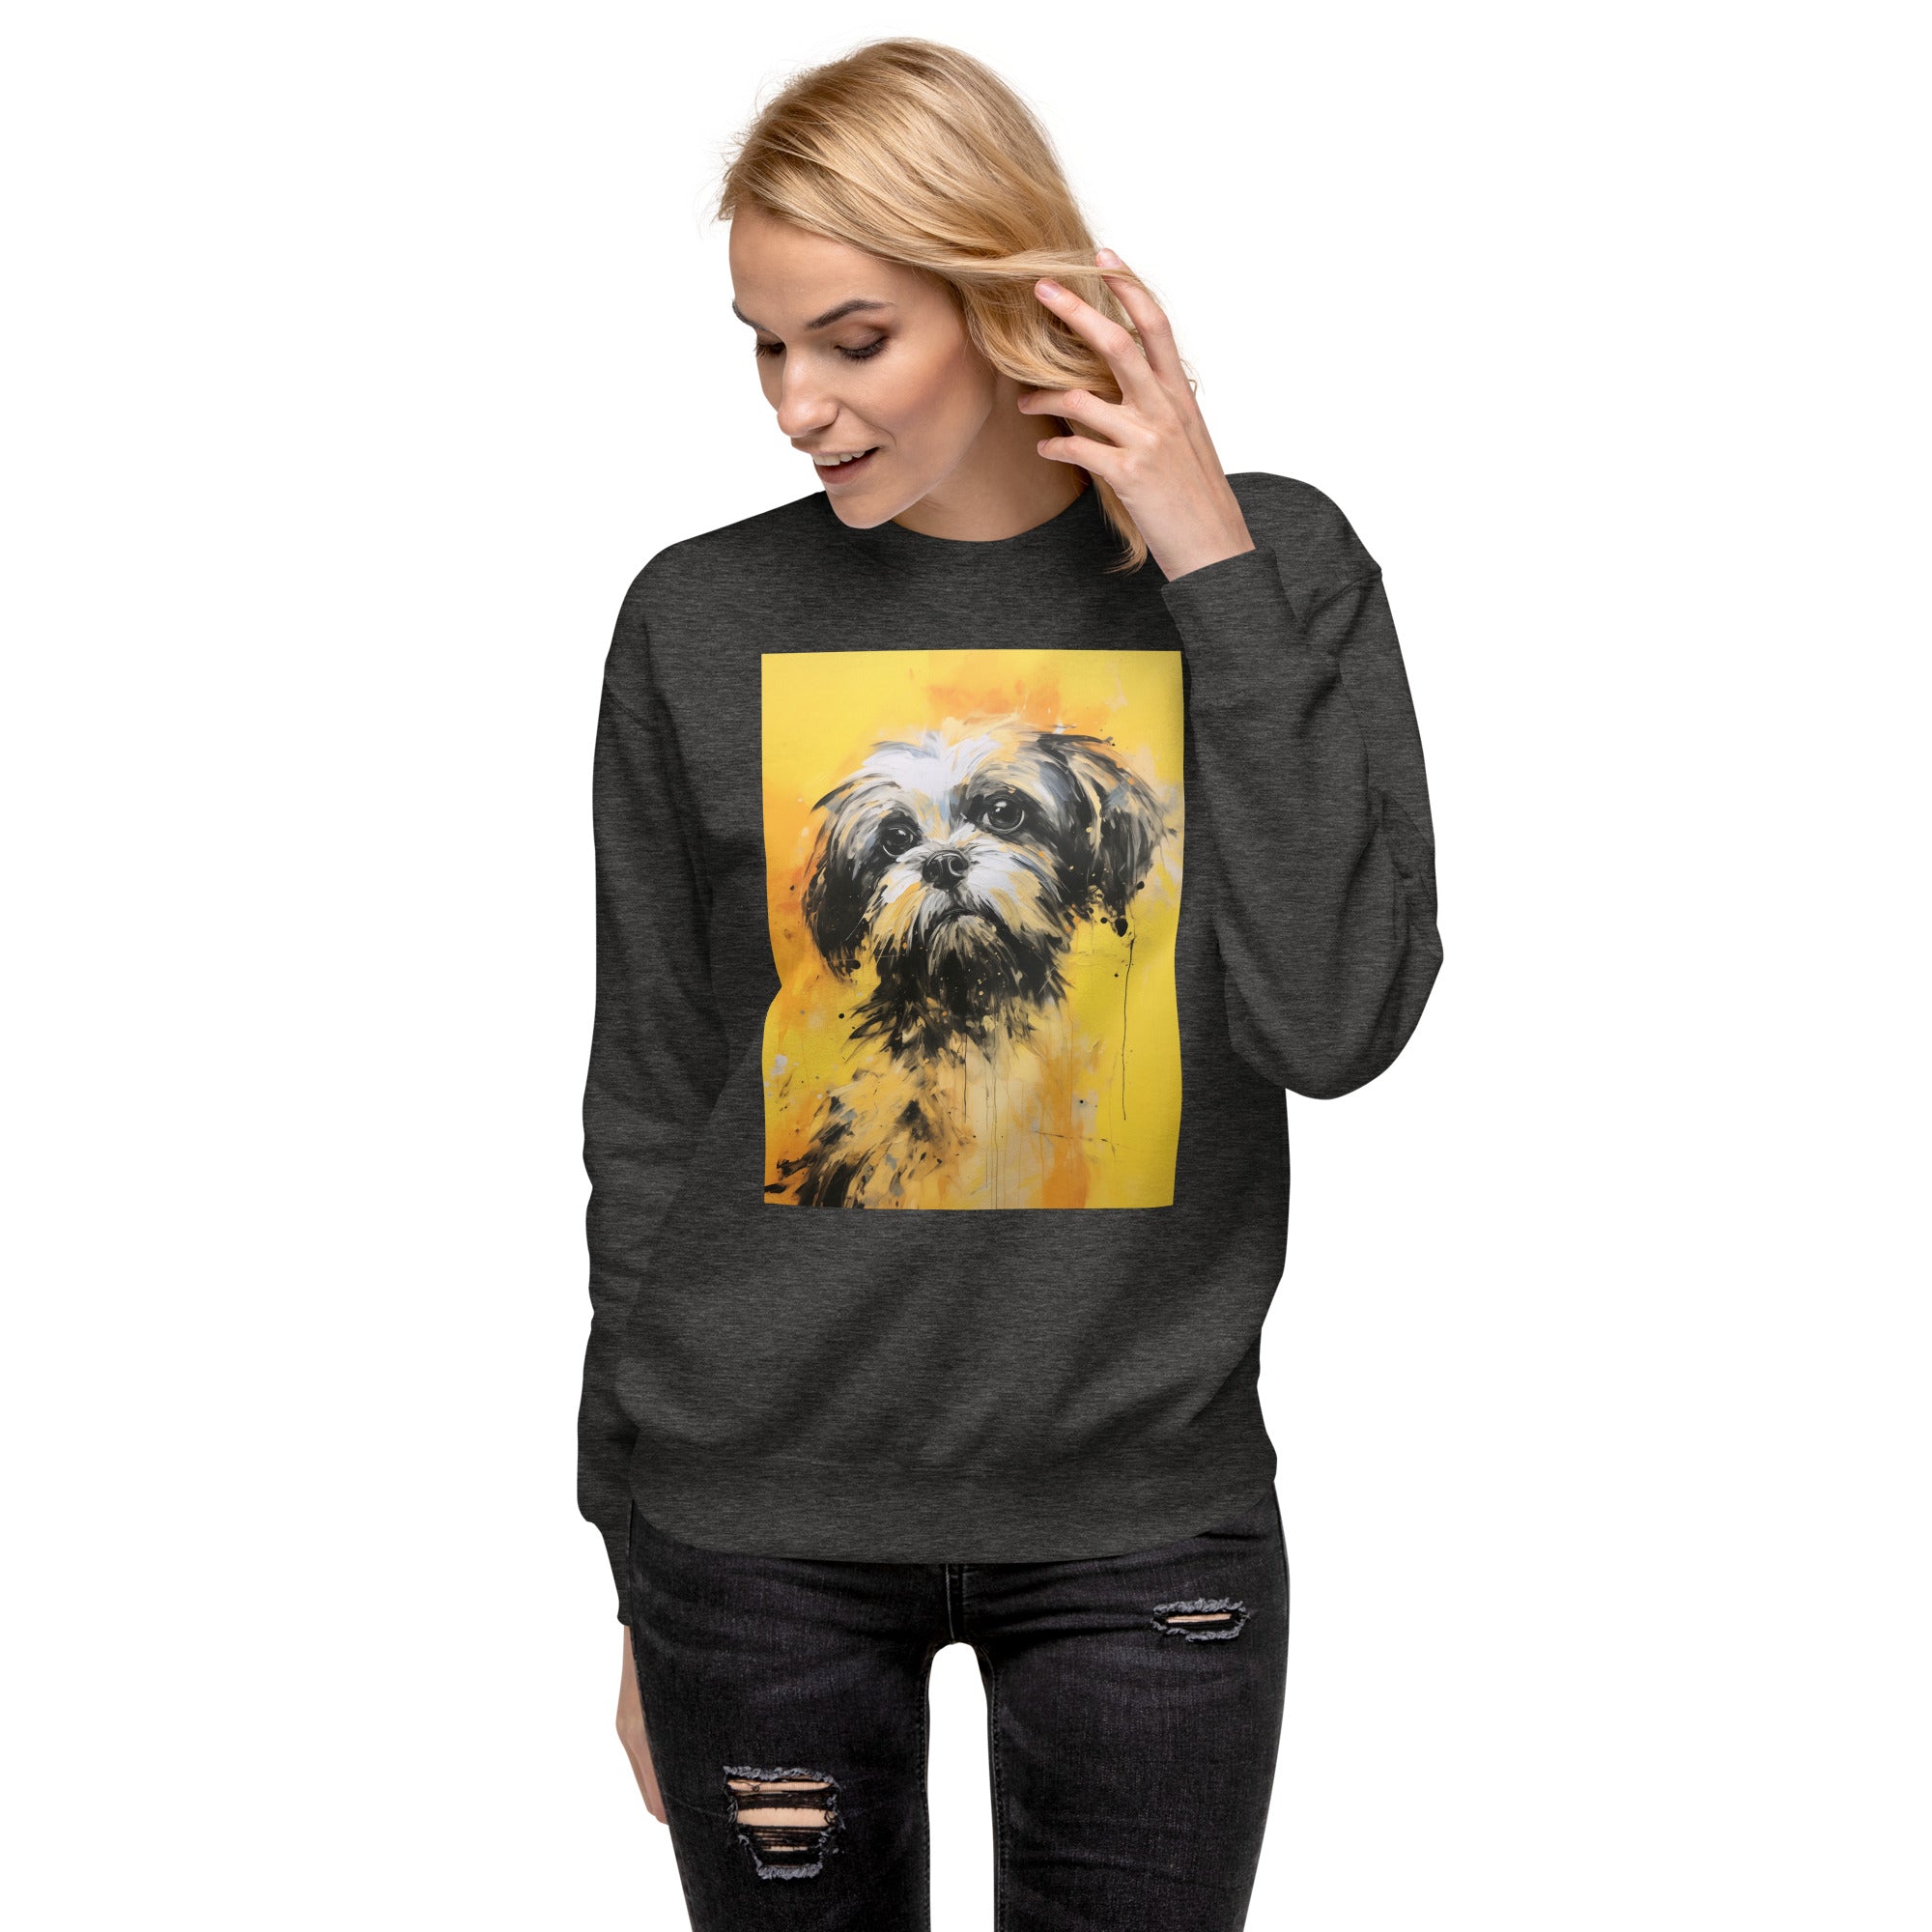 Unisex Premium Sweatshirt - I ❤ DOGS - Shih Tzu